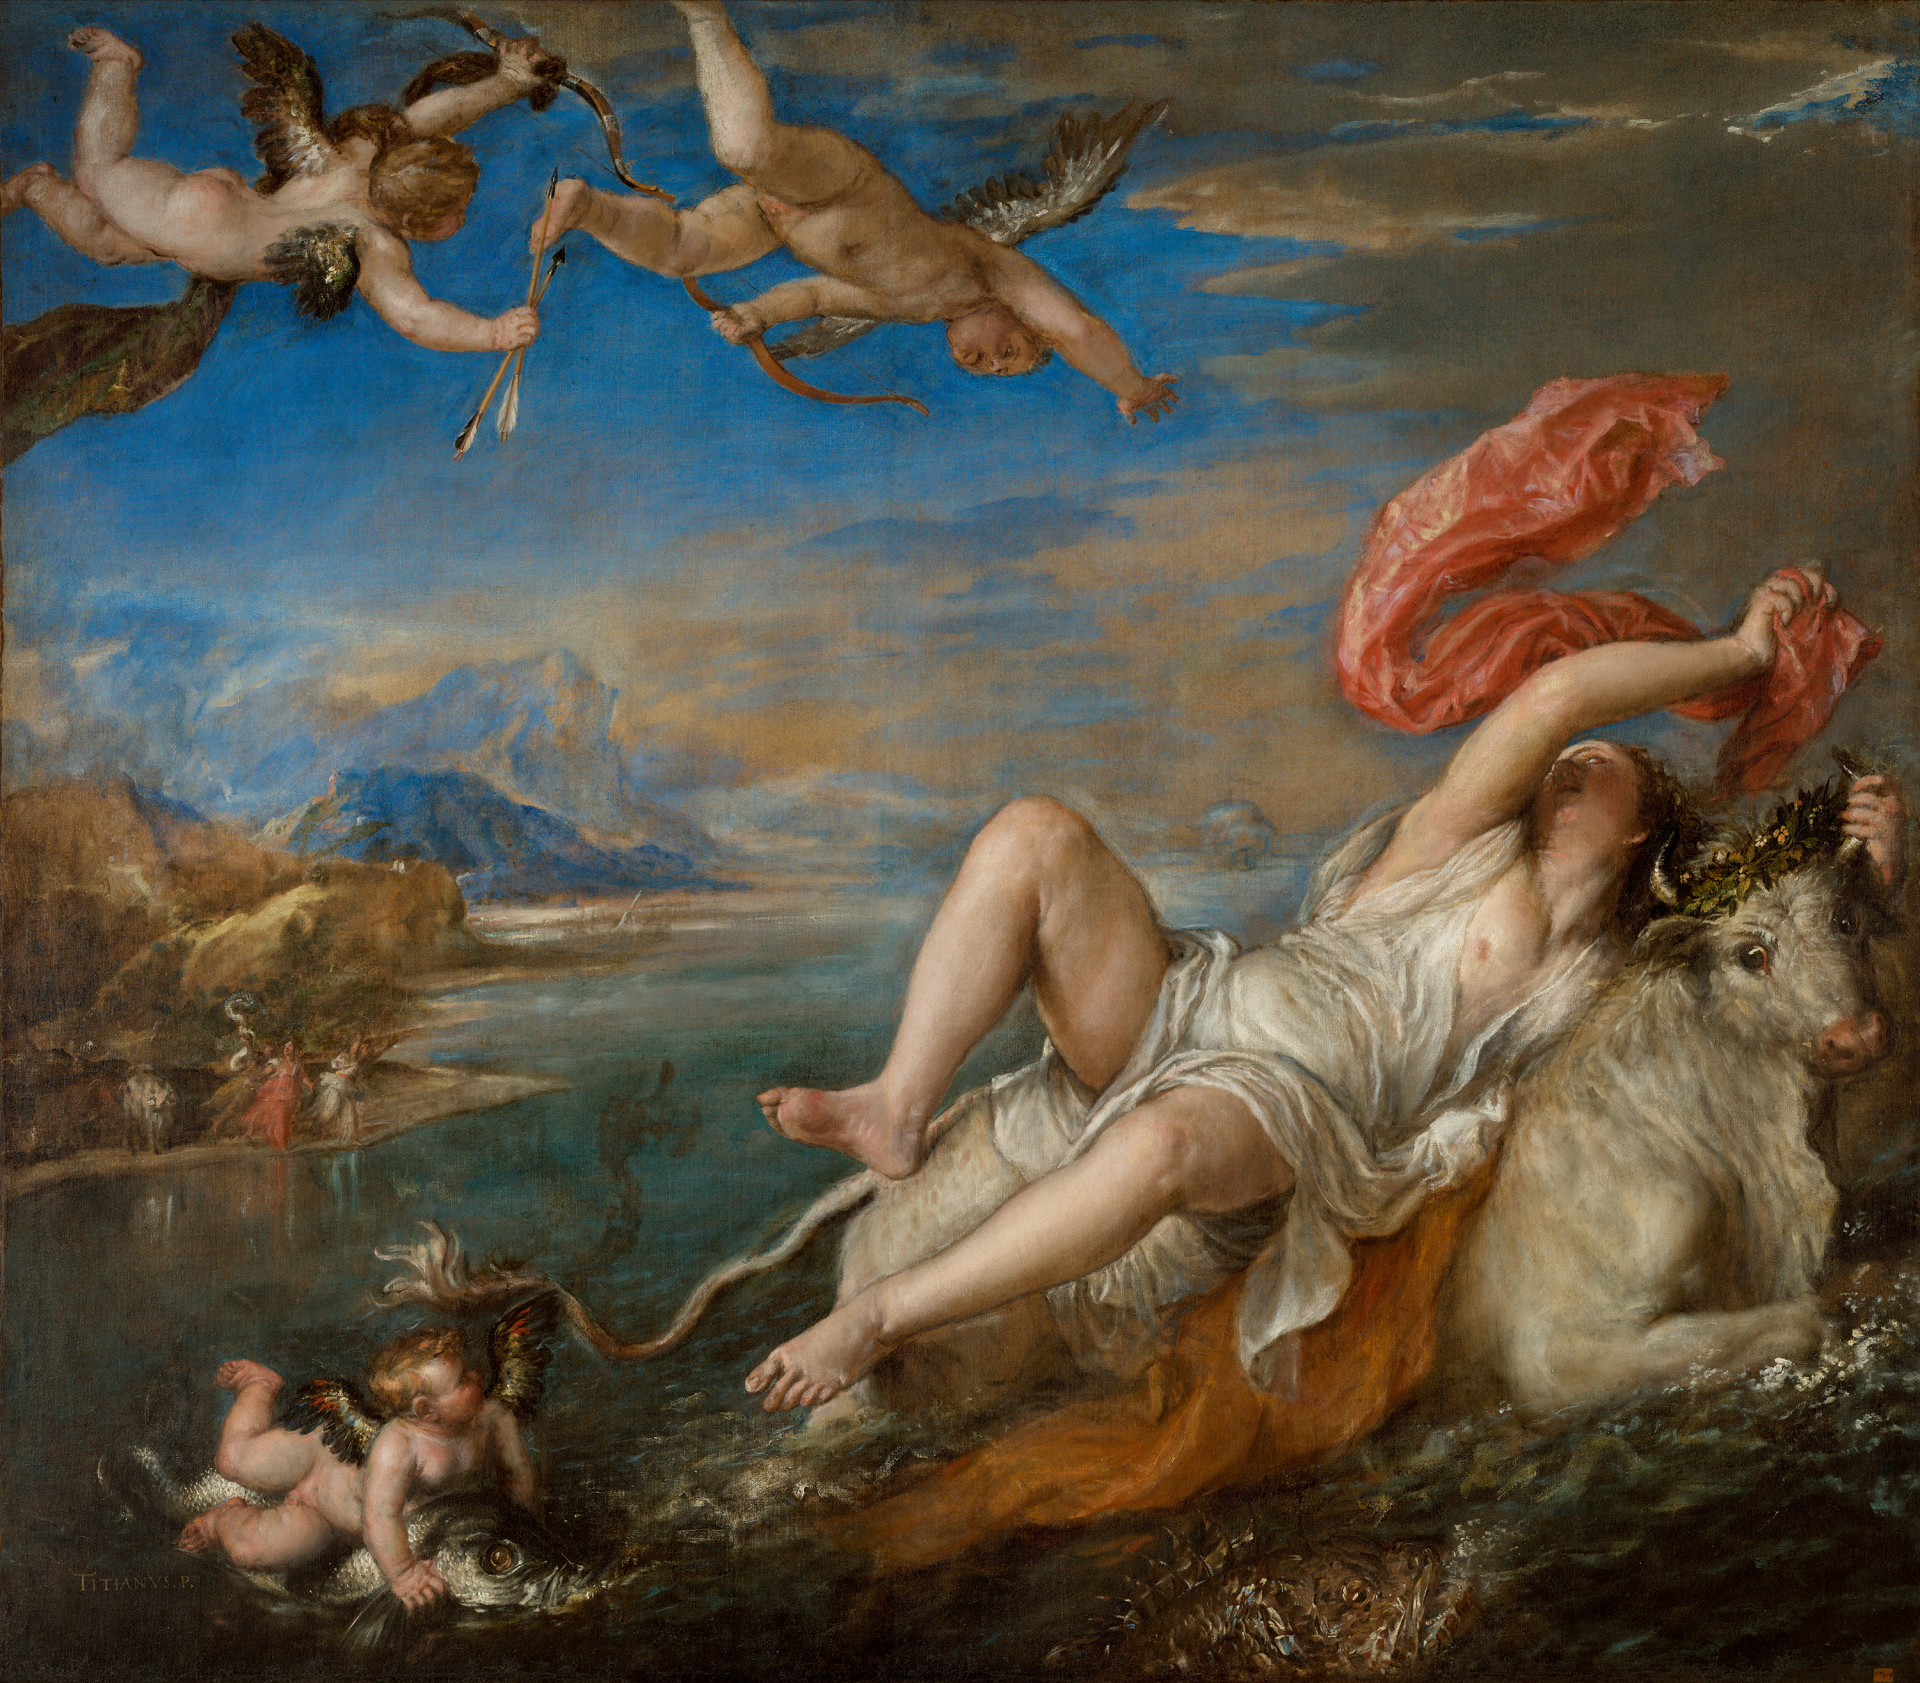 "Rape of Europa" painting